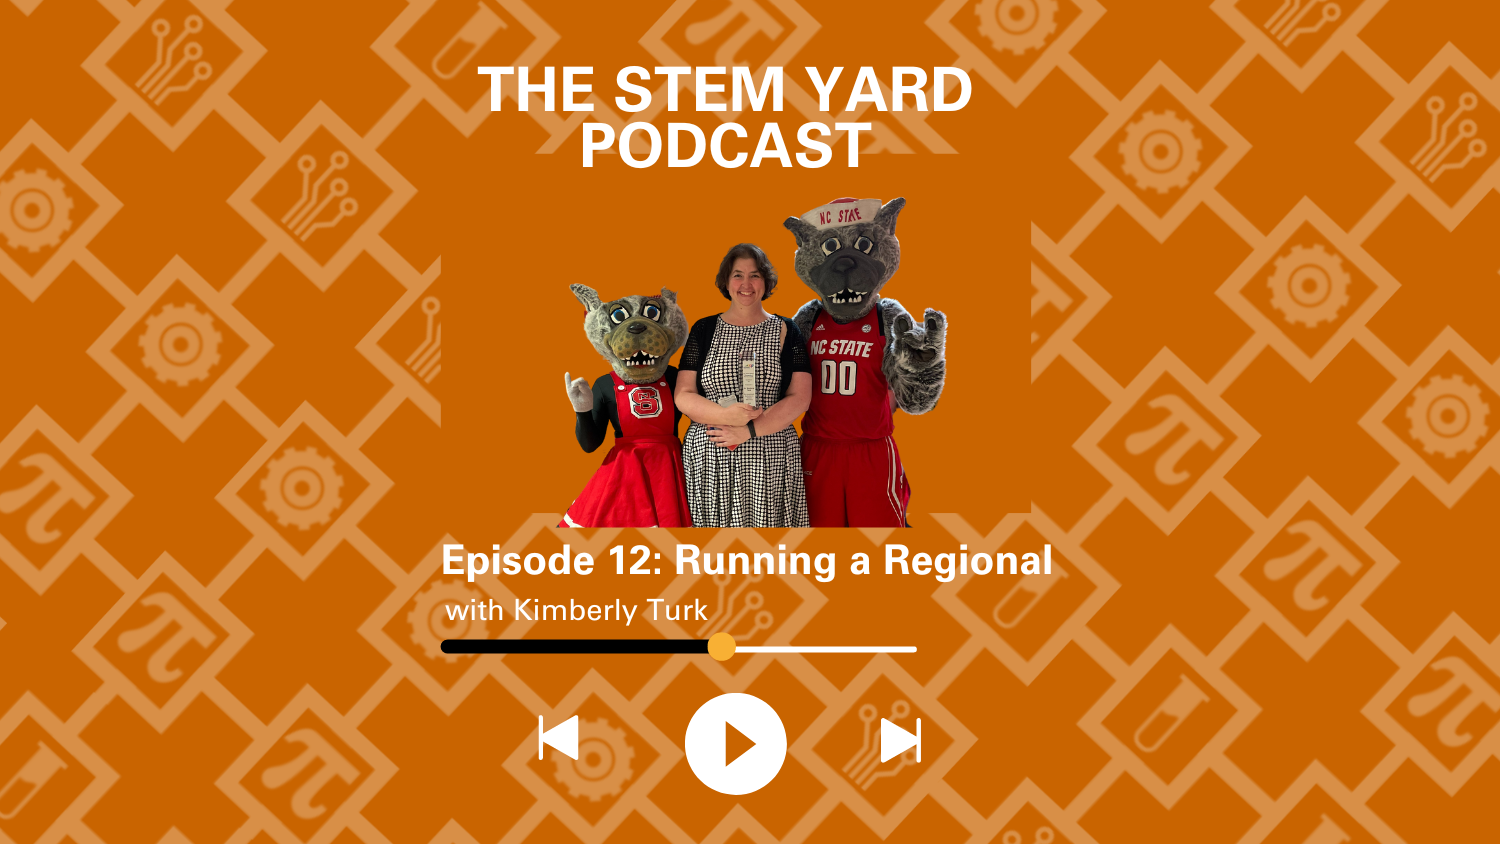 The STEM Yard Episode 12 - Running a Regional with Kiimberly Turk